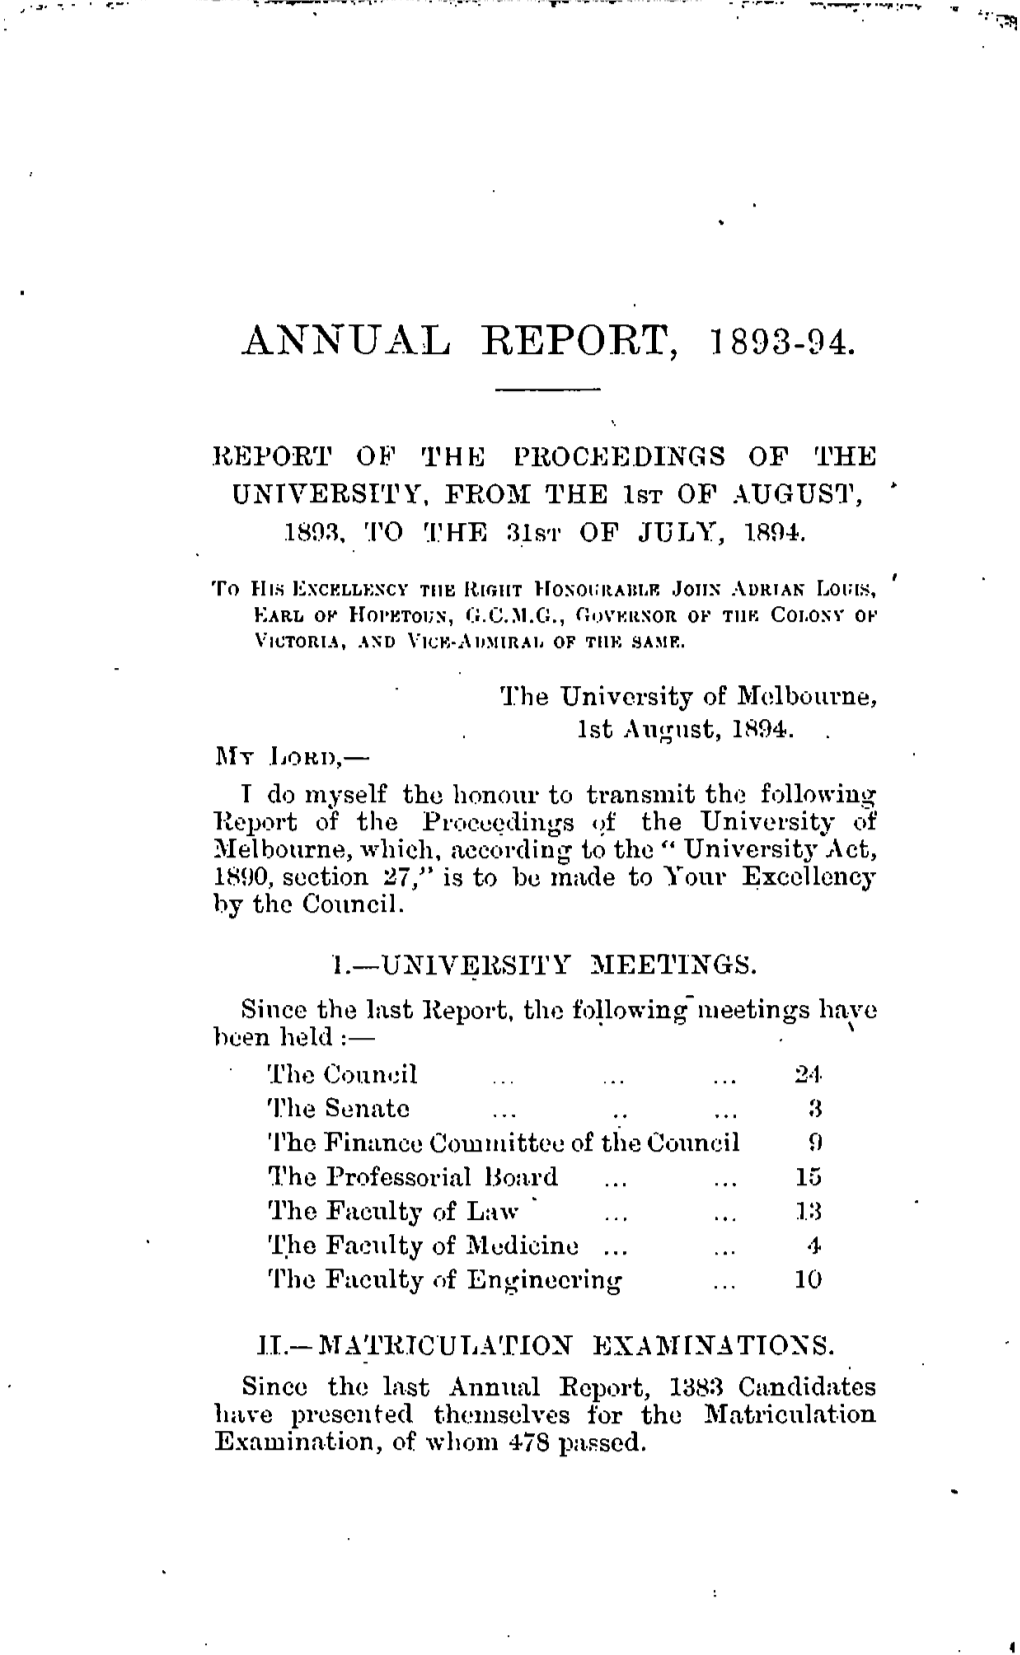 Annual Report, 1893-94